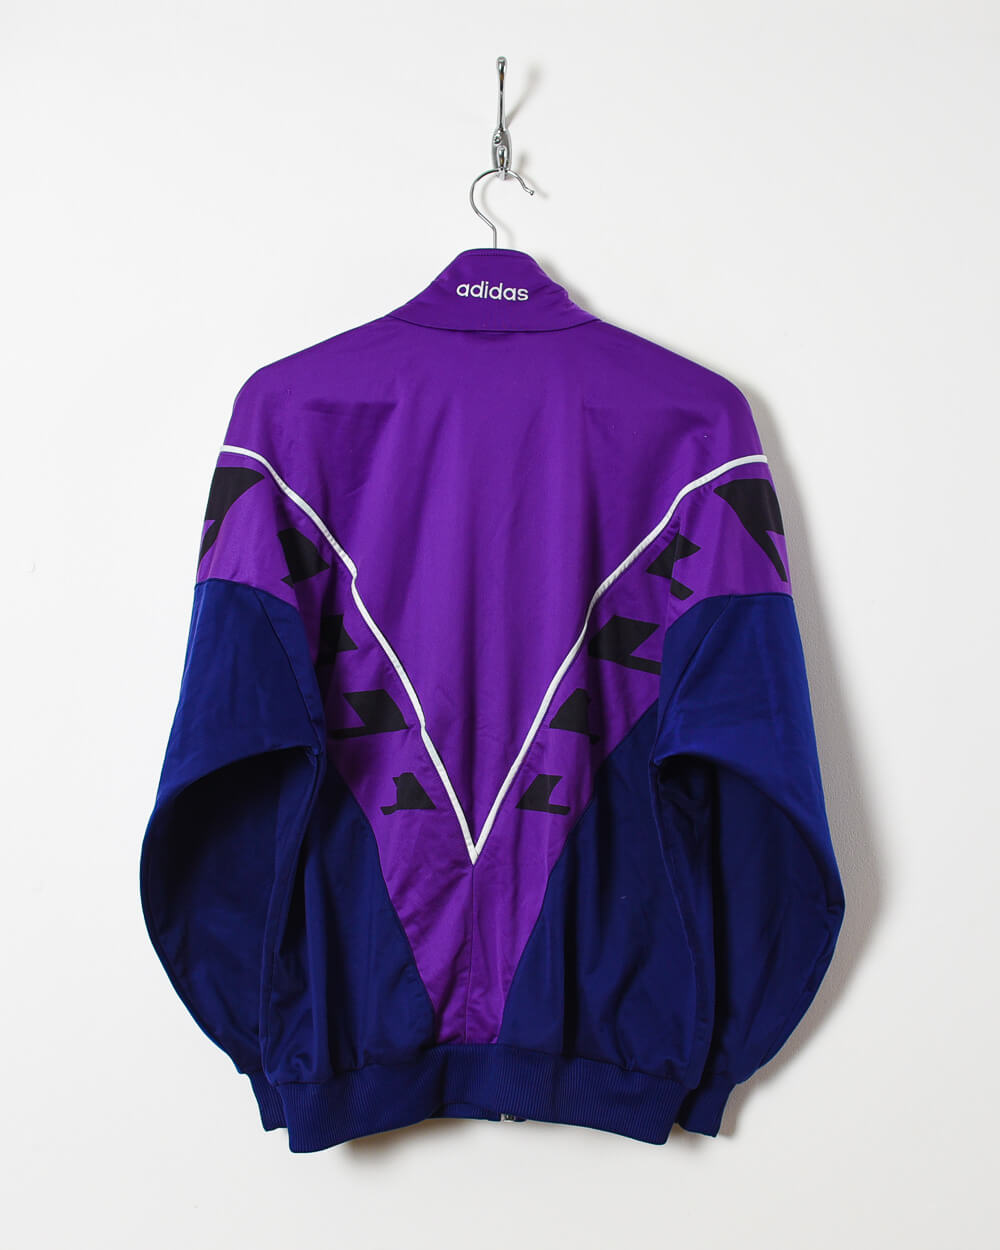 Purple Adidas Tracksuit Top - Small